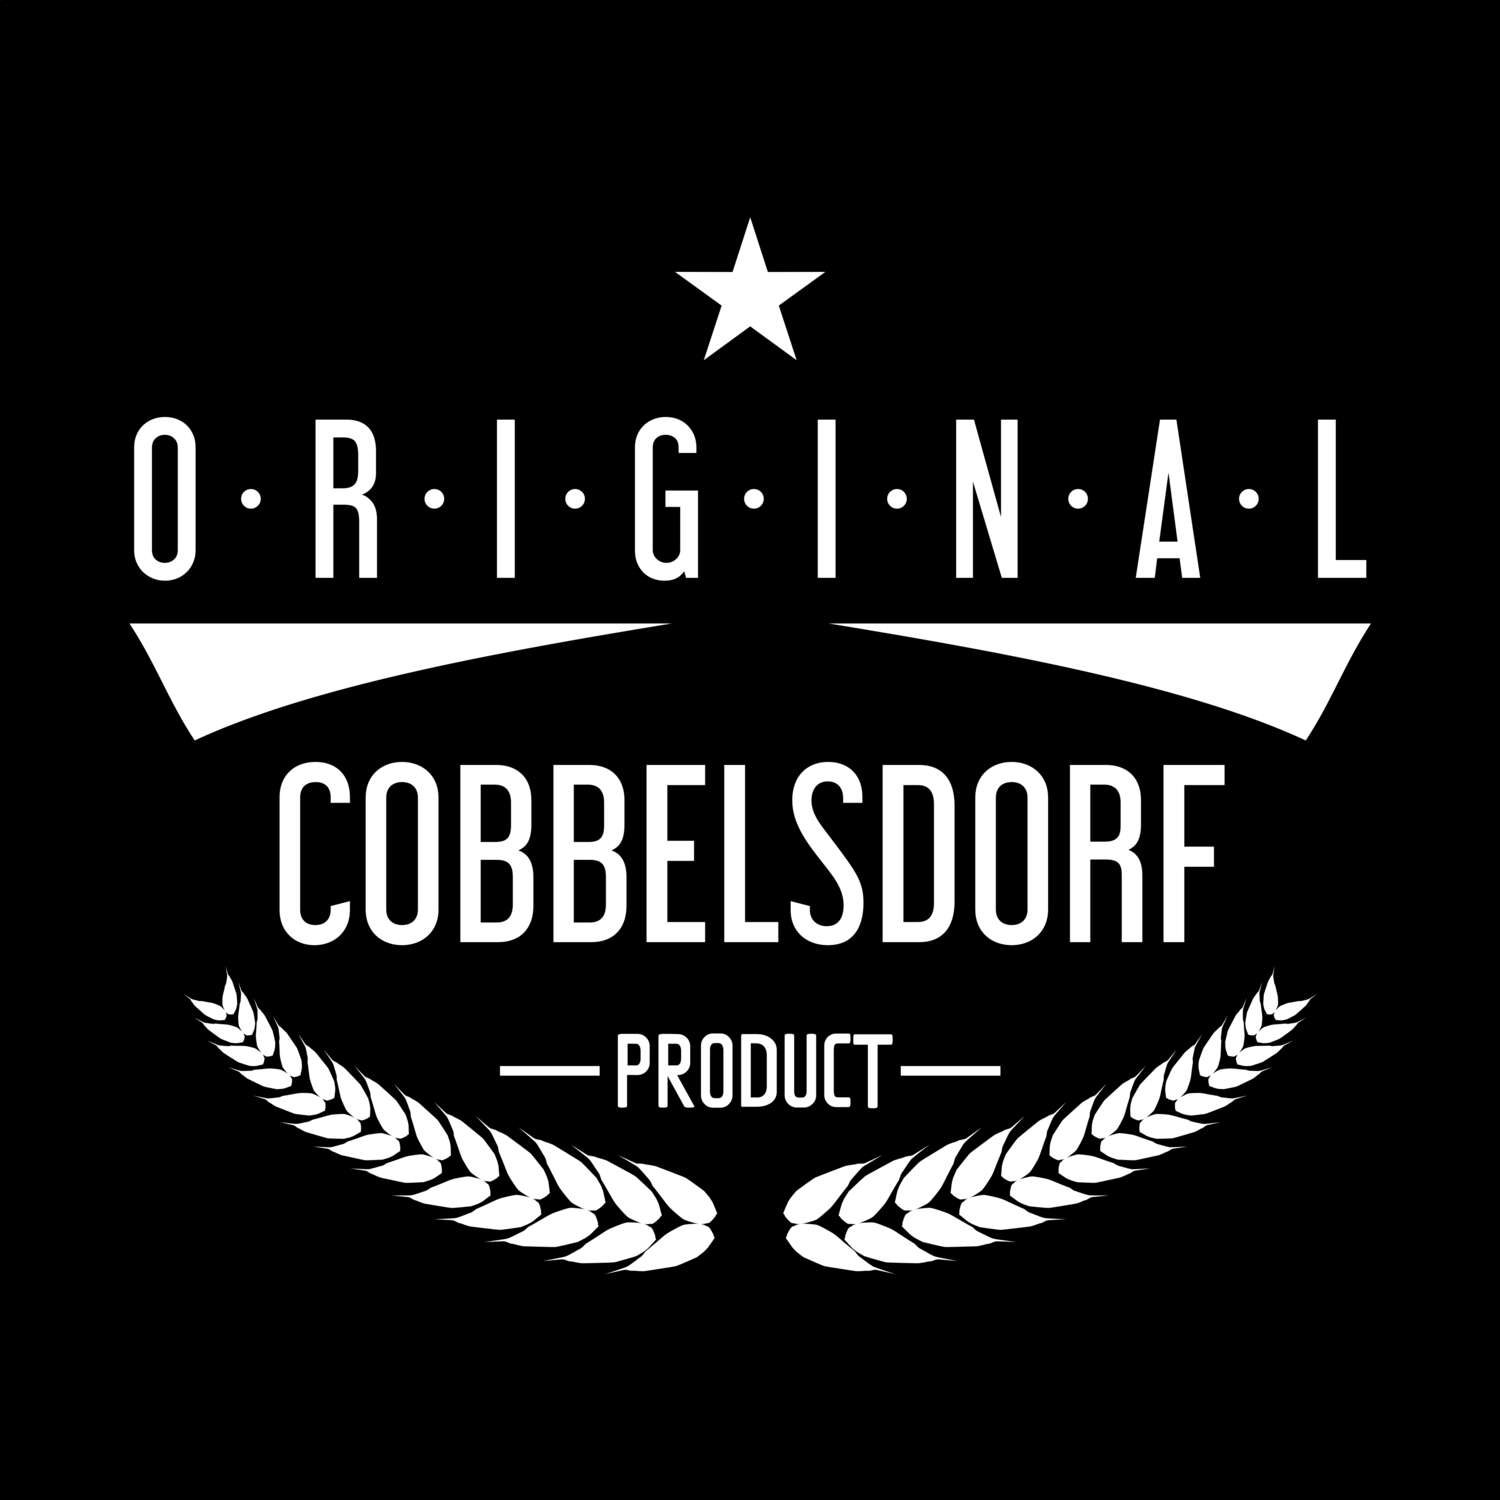 Cobbelsdorf T-Shirt »Original Product«